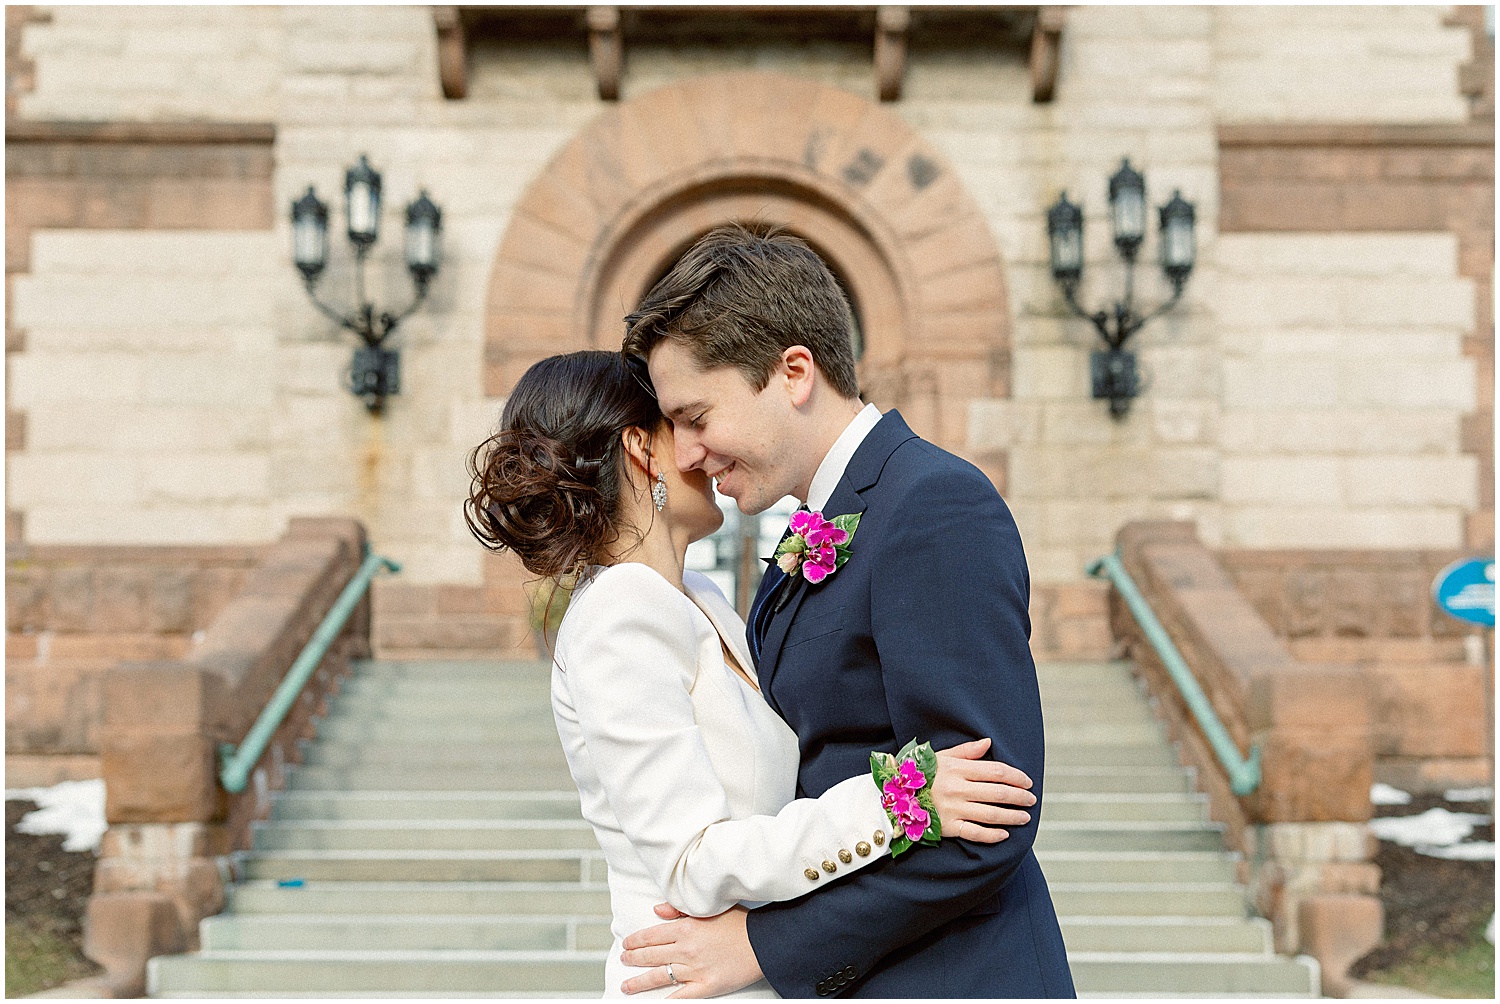 Winter elopement photos at Cambridge City Hall